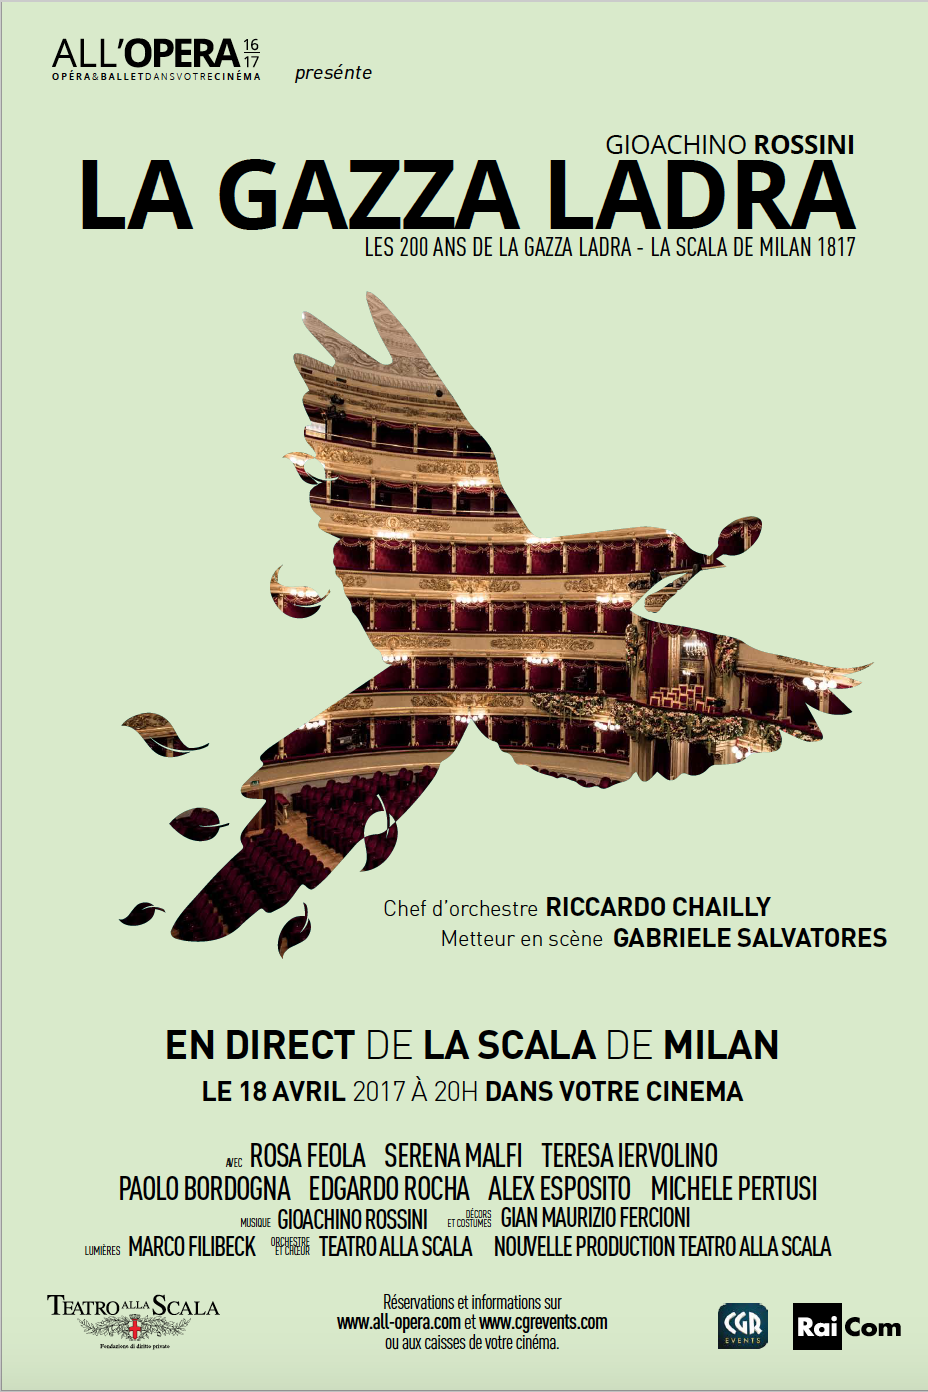 La Gazza Ladra - All'Opera (CGR Events)